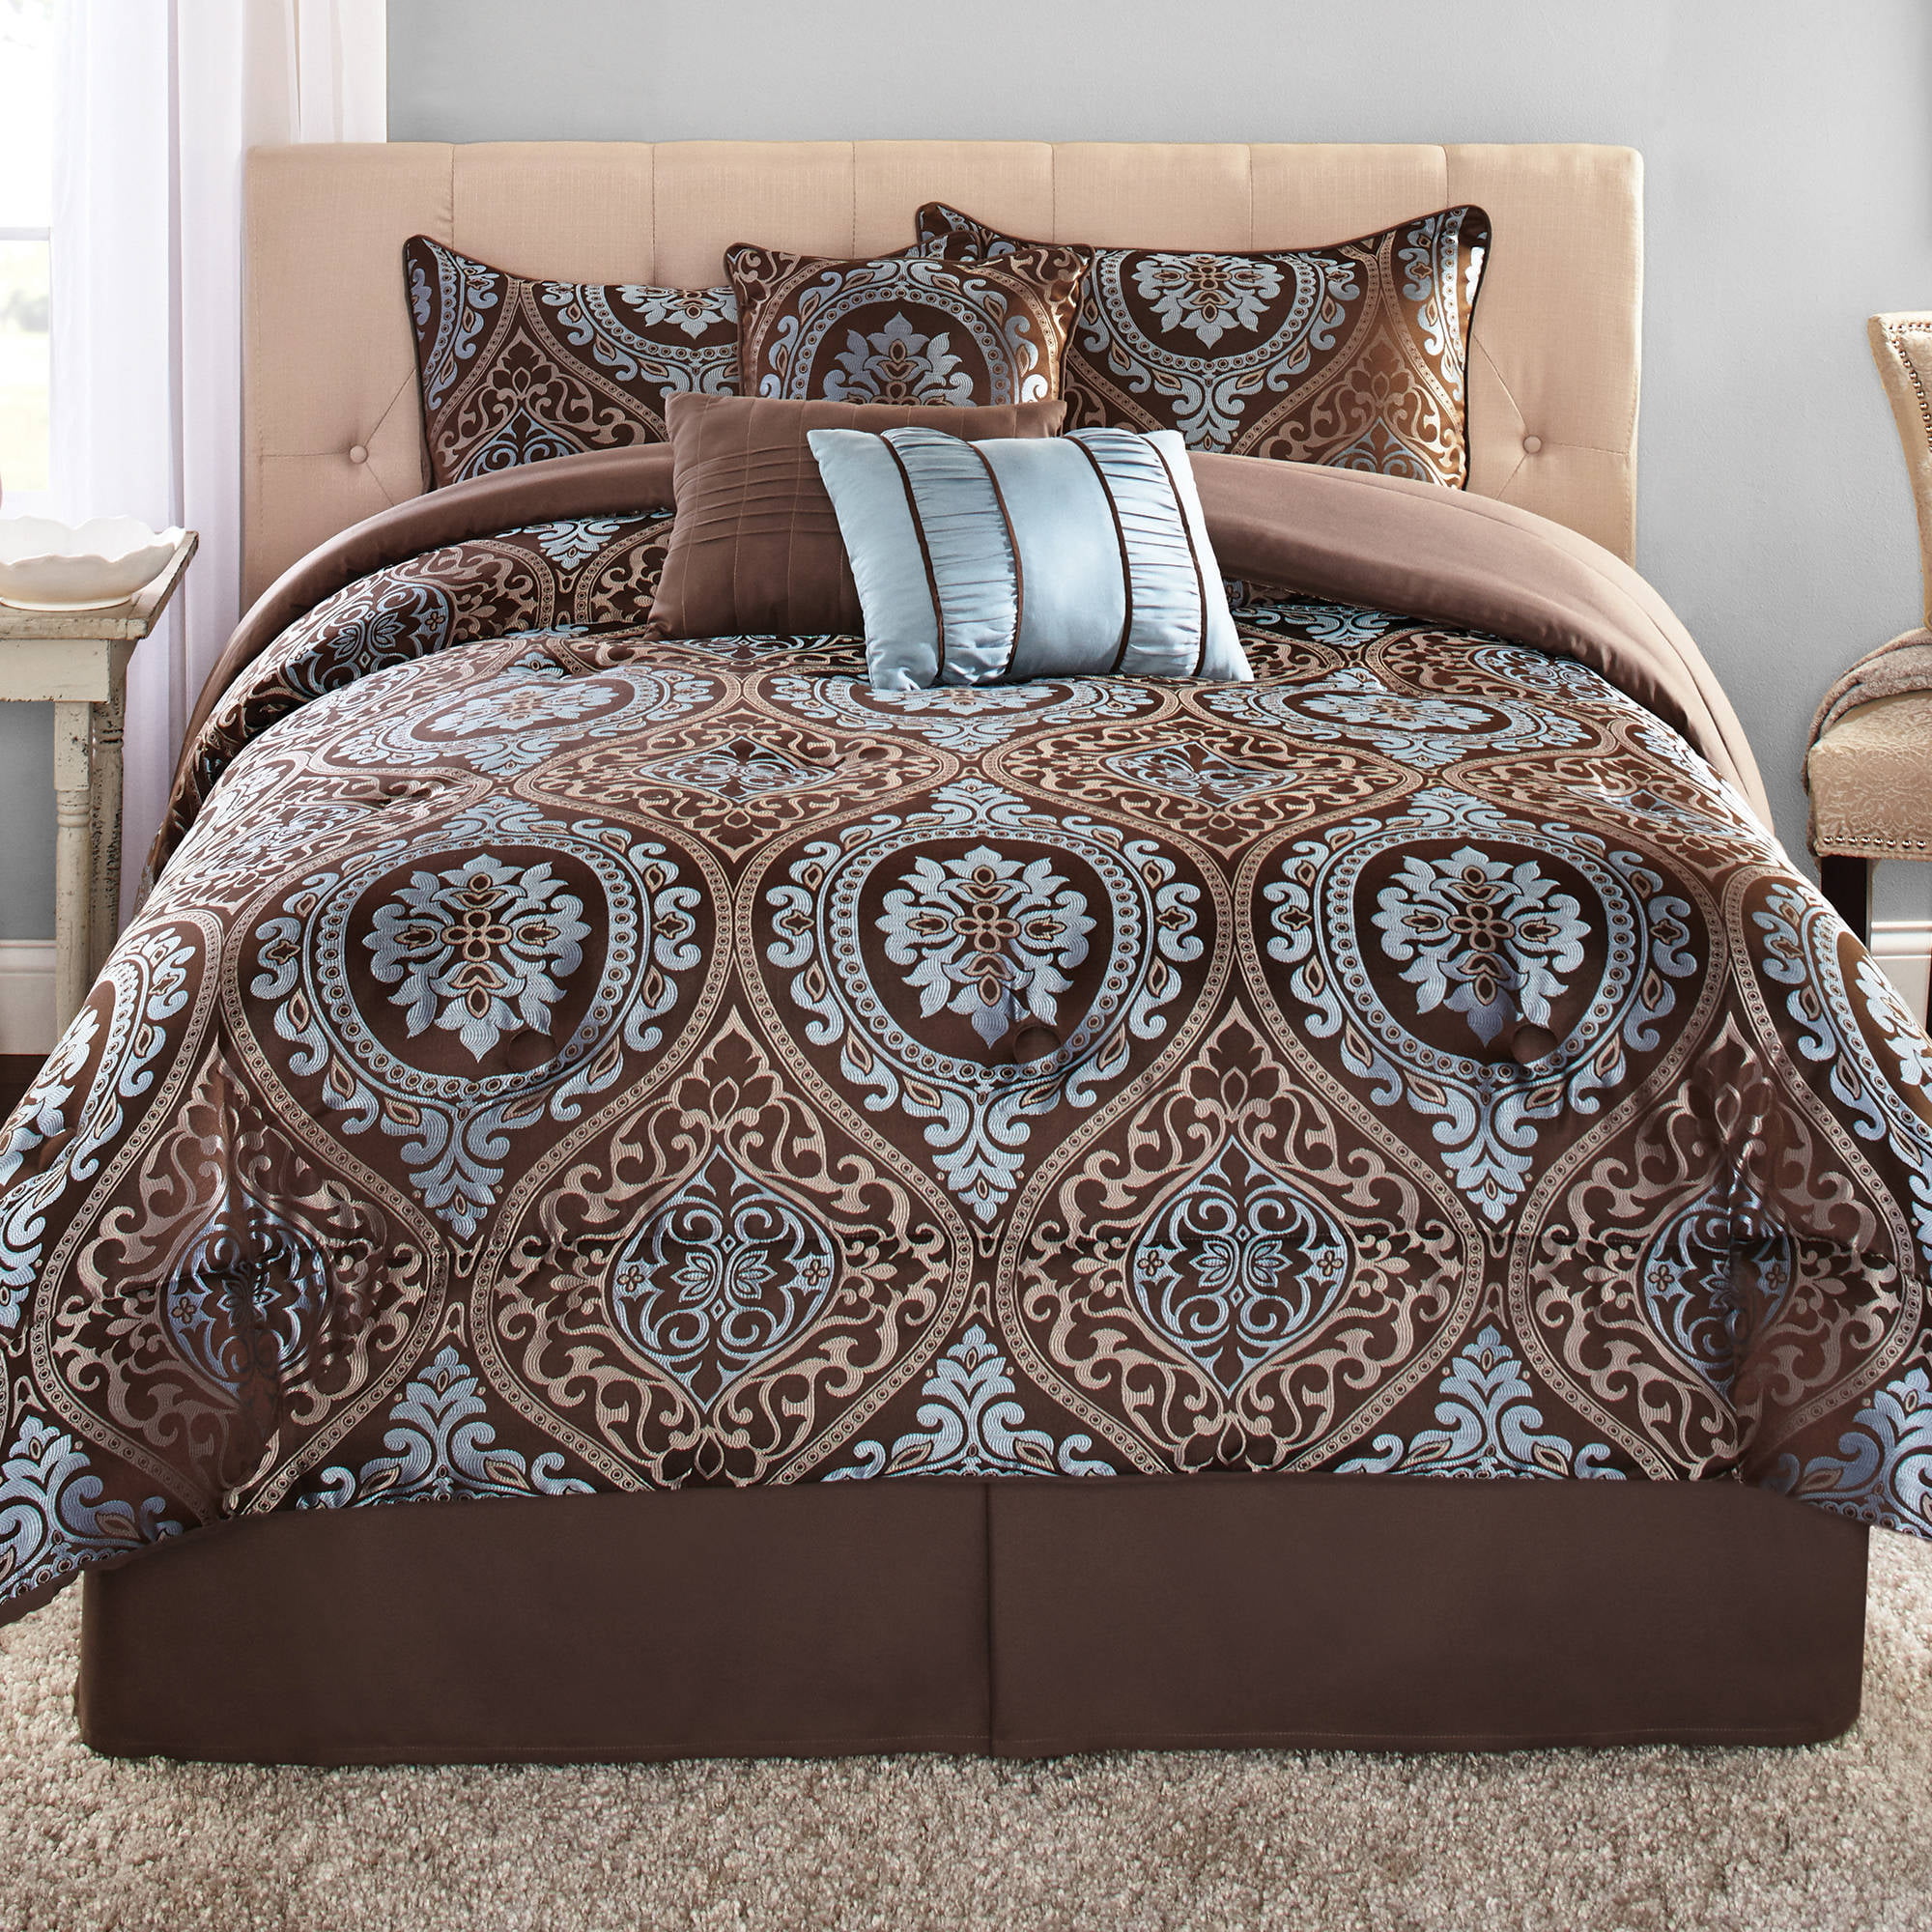 Pointehaven Casablanca Textured Print Luxury sized 3 pc Comforter 